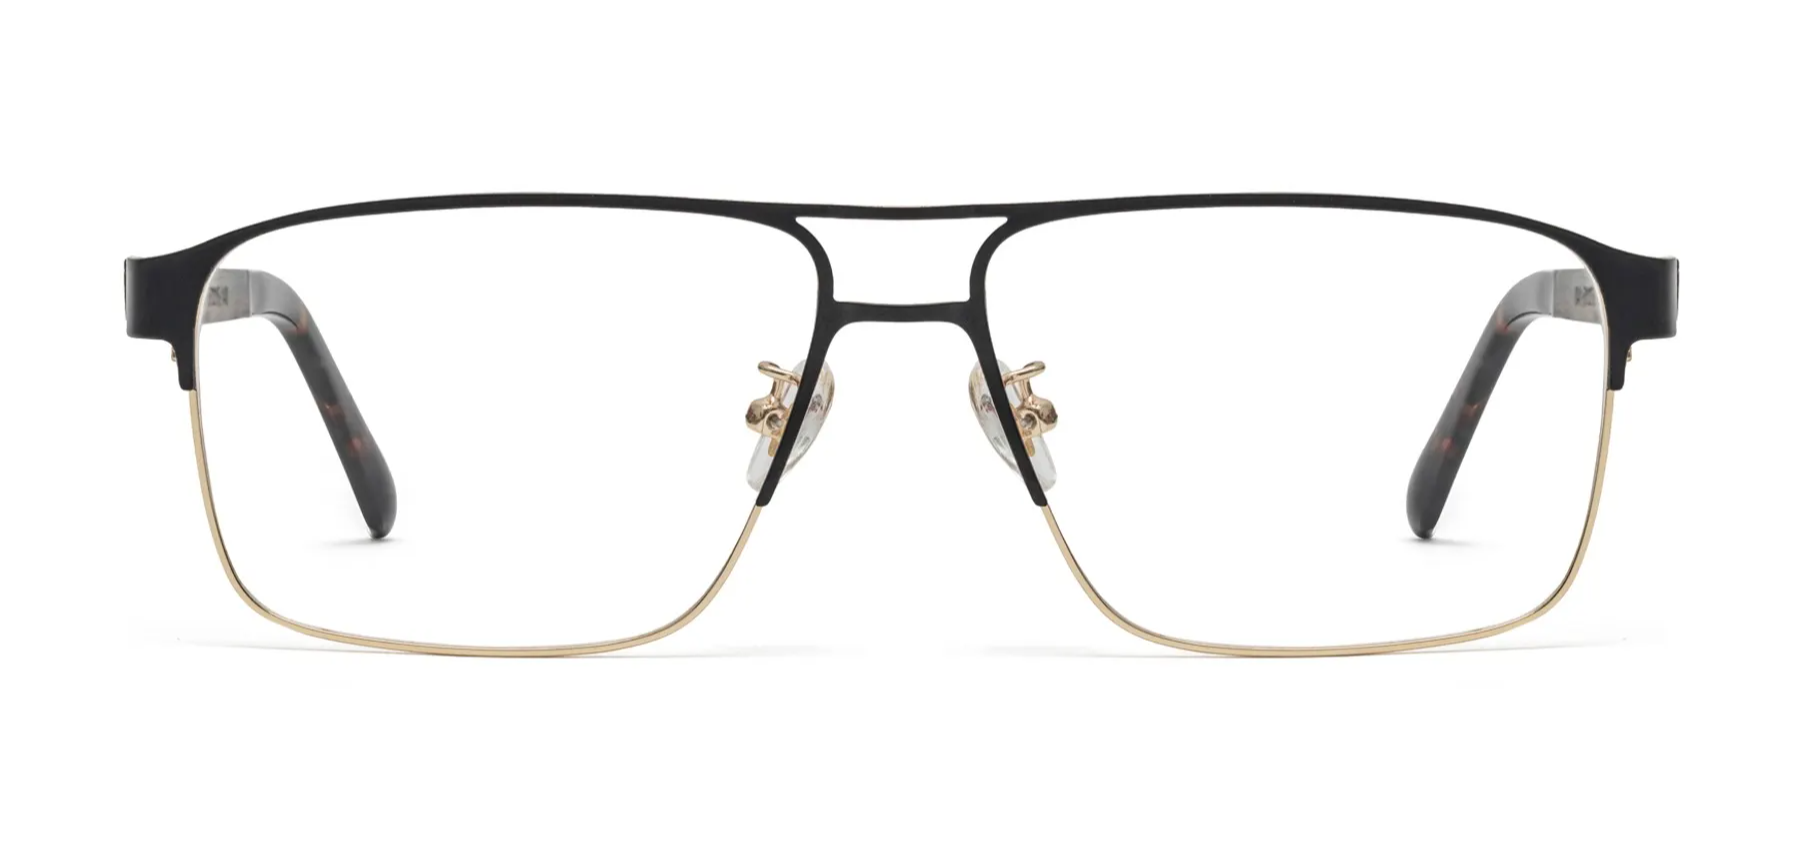 black and gold rectangle titanium glasses frames